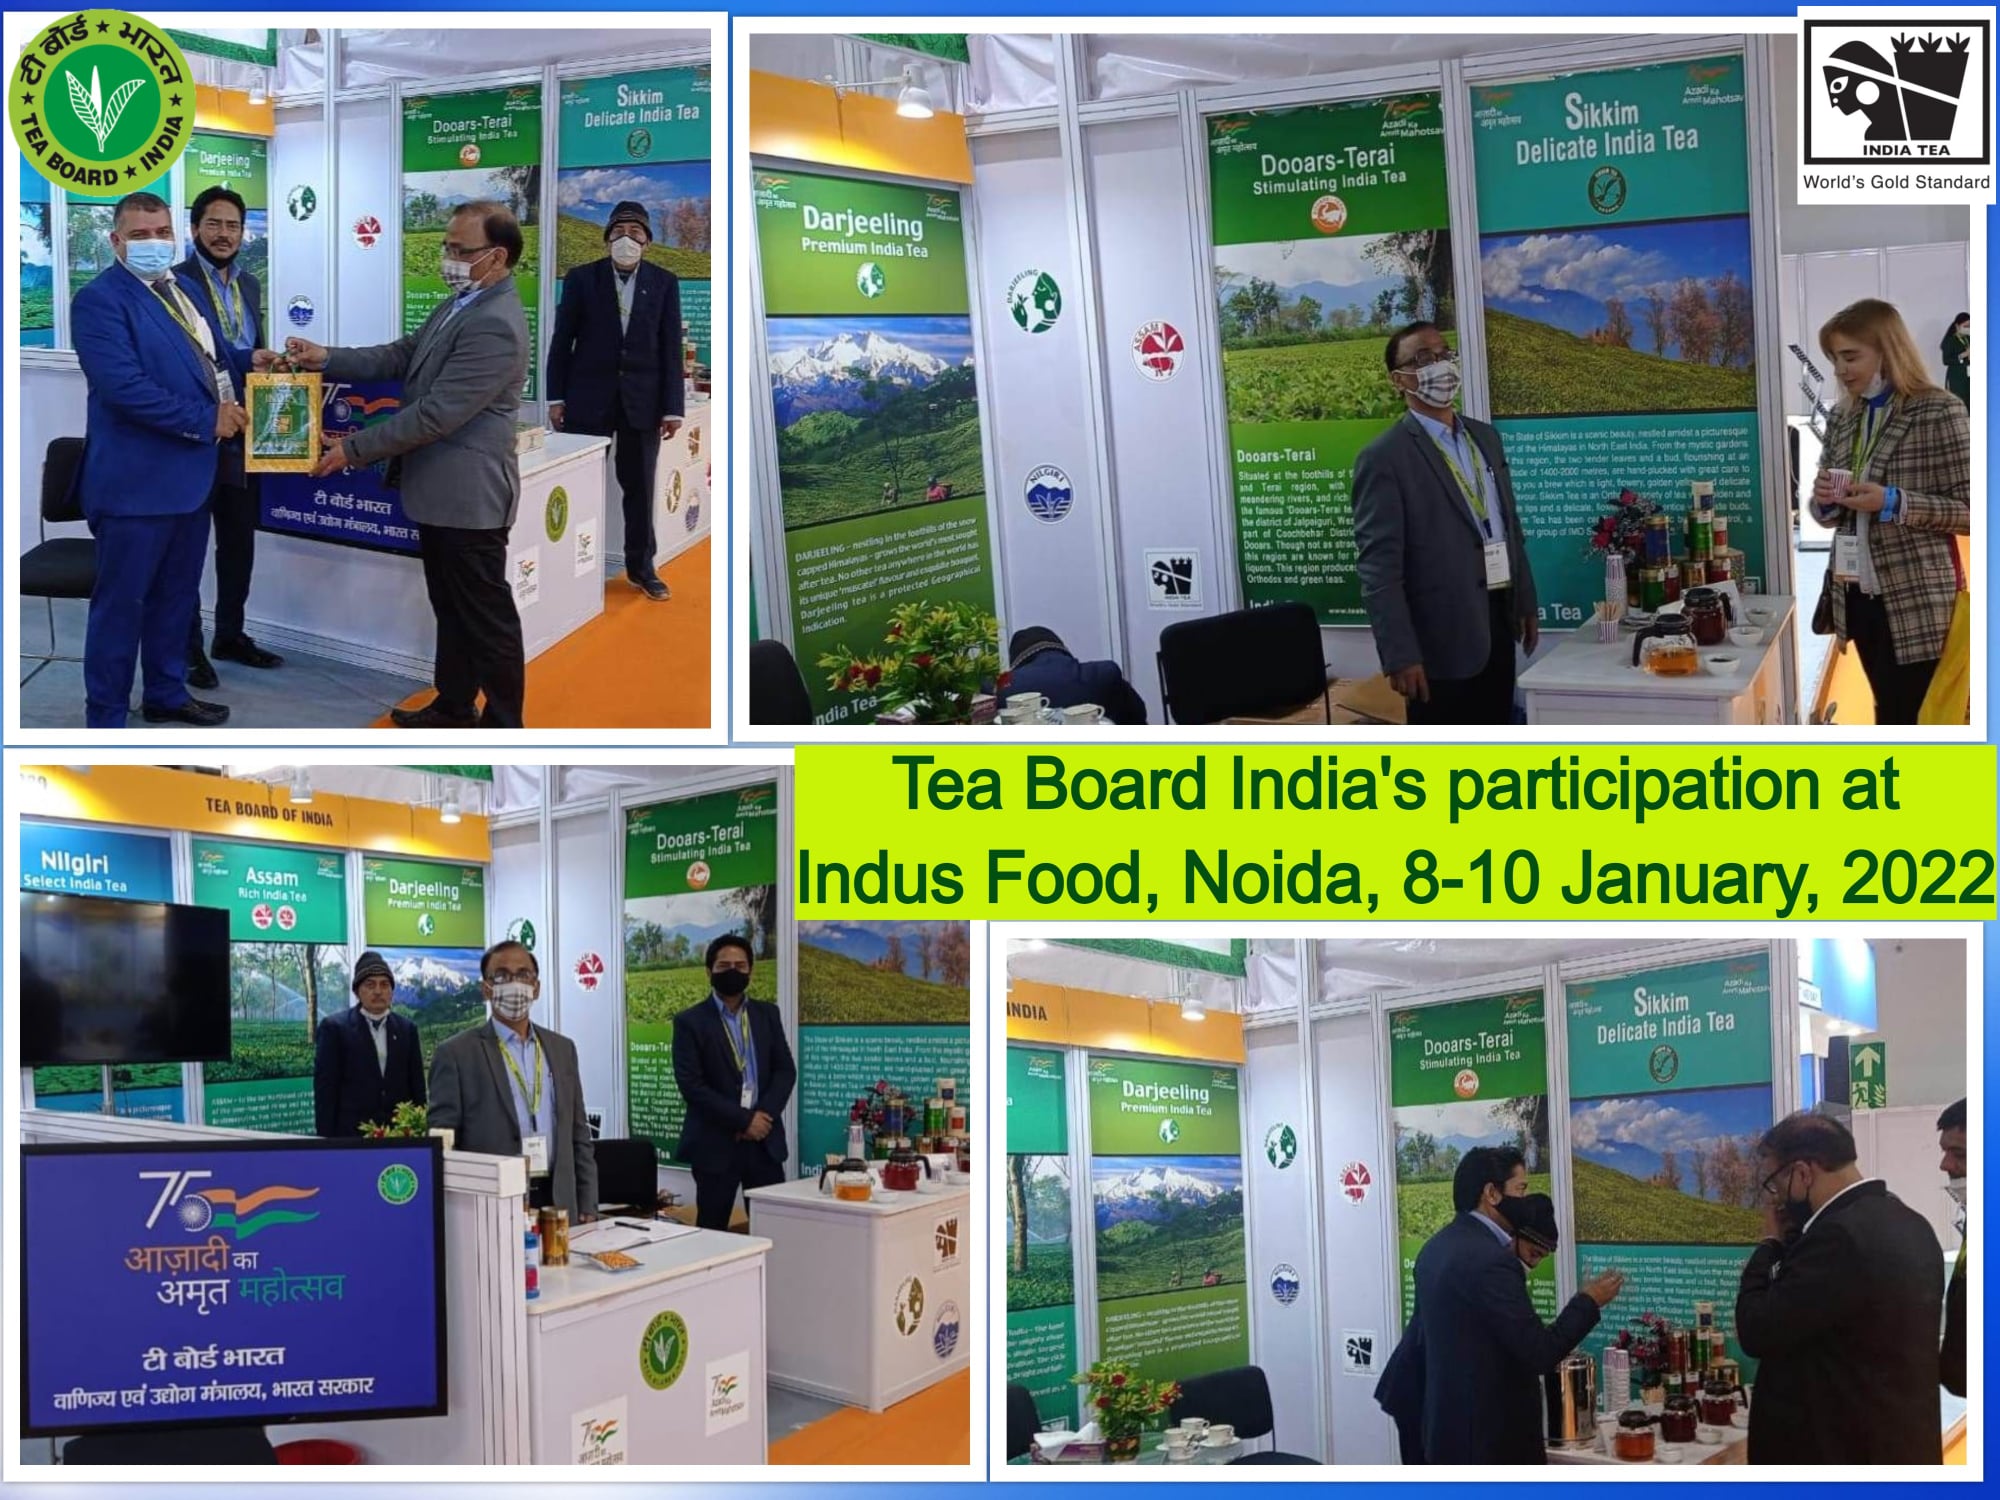 Tea Board India's participation at Indus Food, Noida, 8-10 January 2022